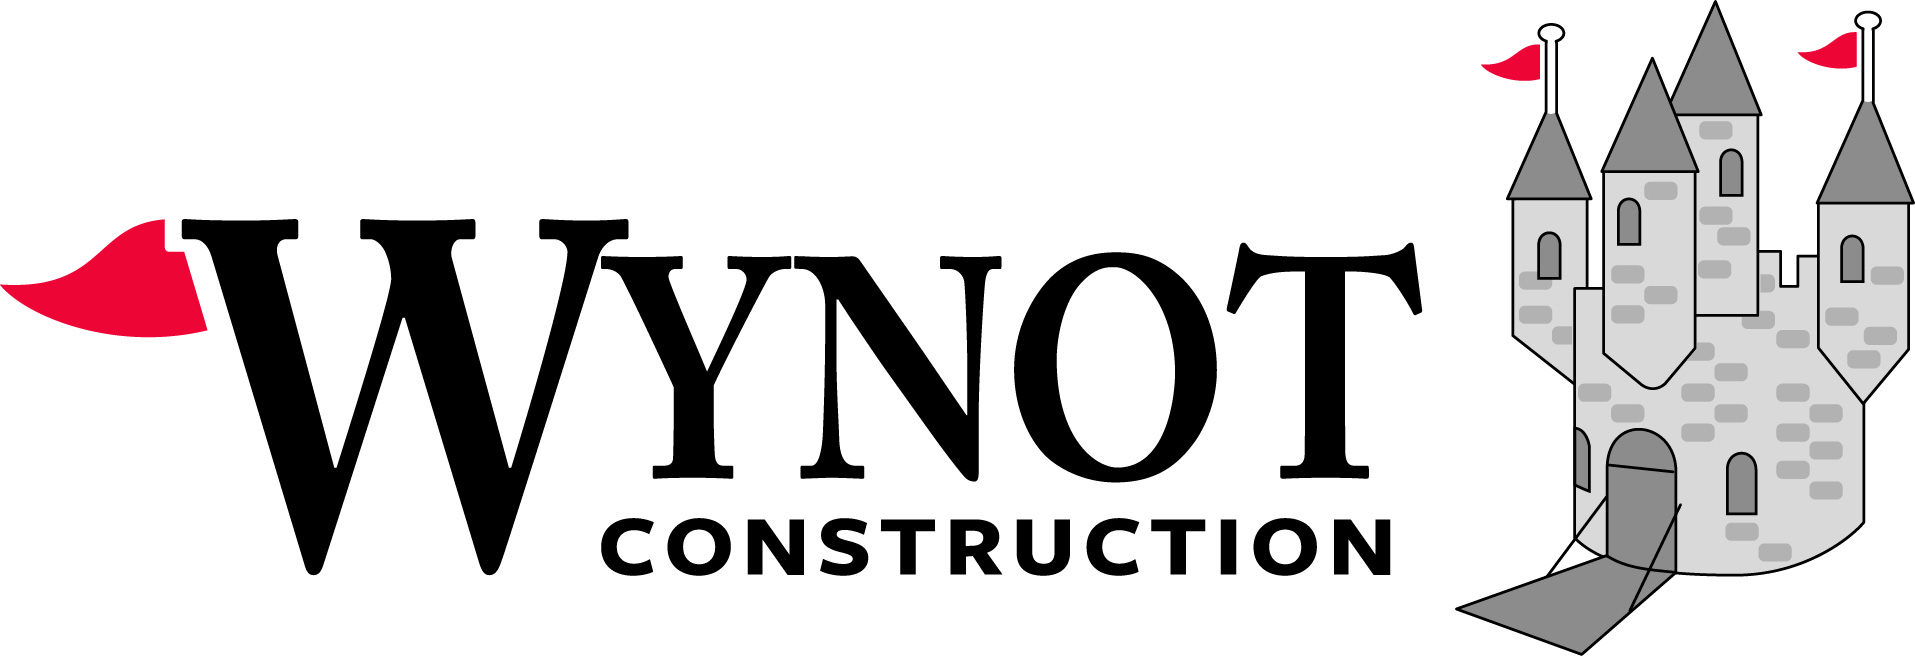 Wynot Construction